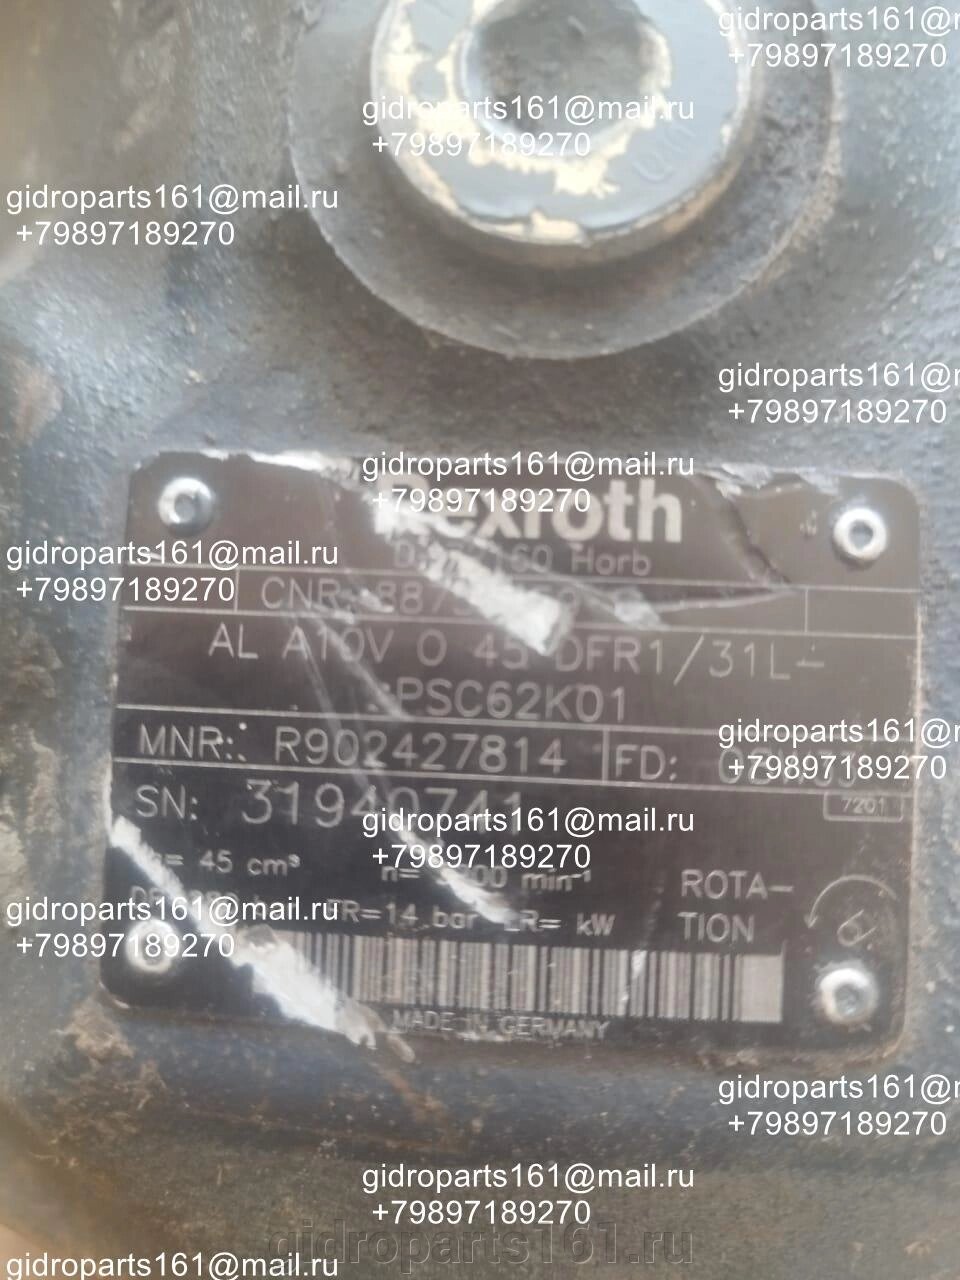 Гидравлический насос REXROTH AL A1-V 045 DFR1/31L-PSC62K01 от компании Гидравлические запчасти 161 - фото 1